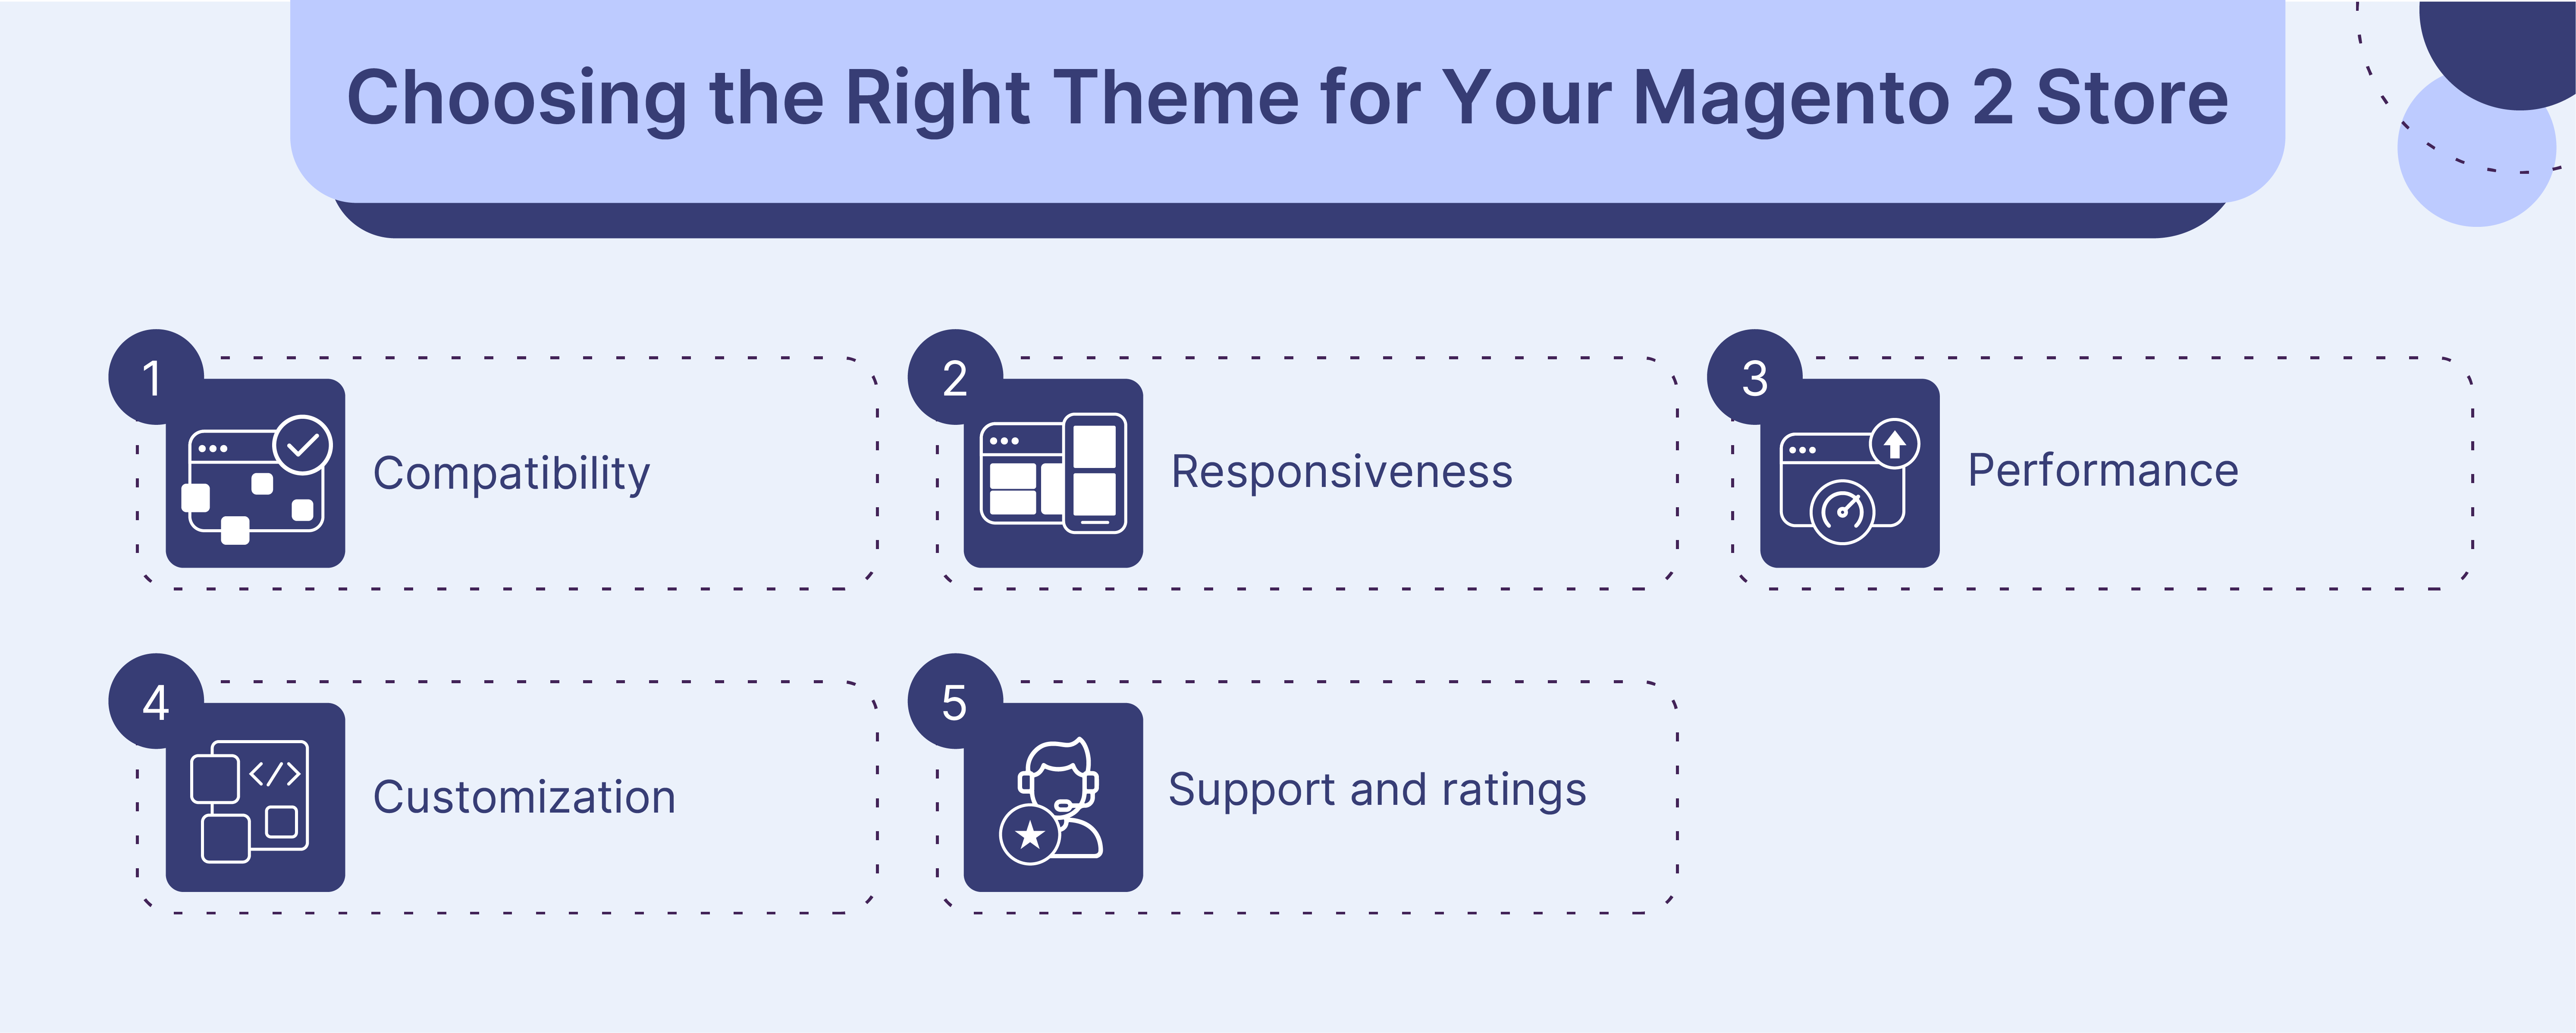 Magento 2 theme selection guide